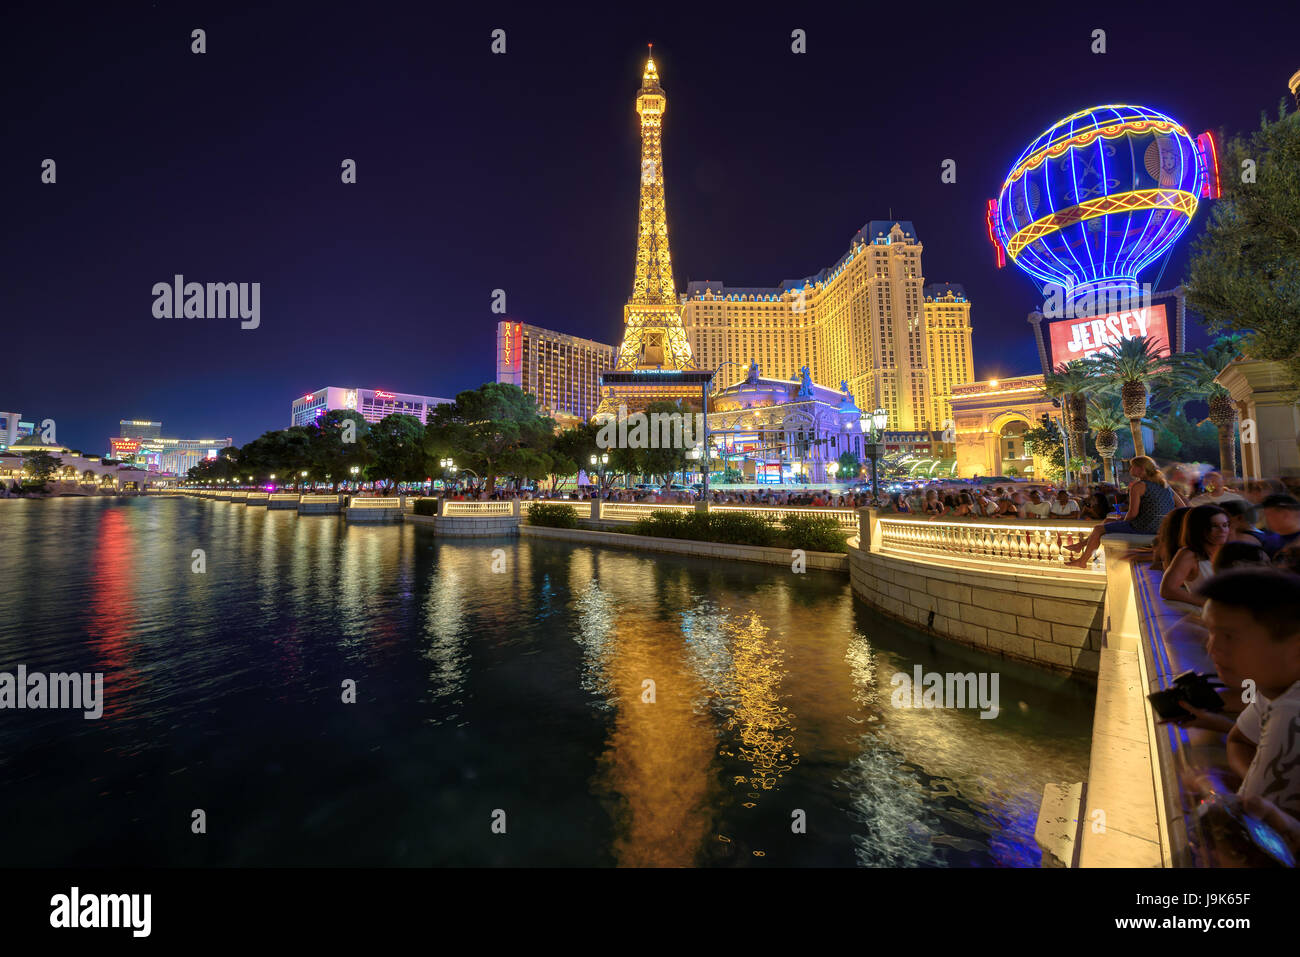 Il Paris Las Vegas hotel e casinò di Las Vegas. Foto Stock